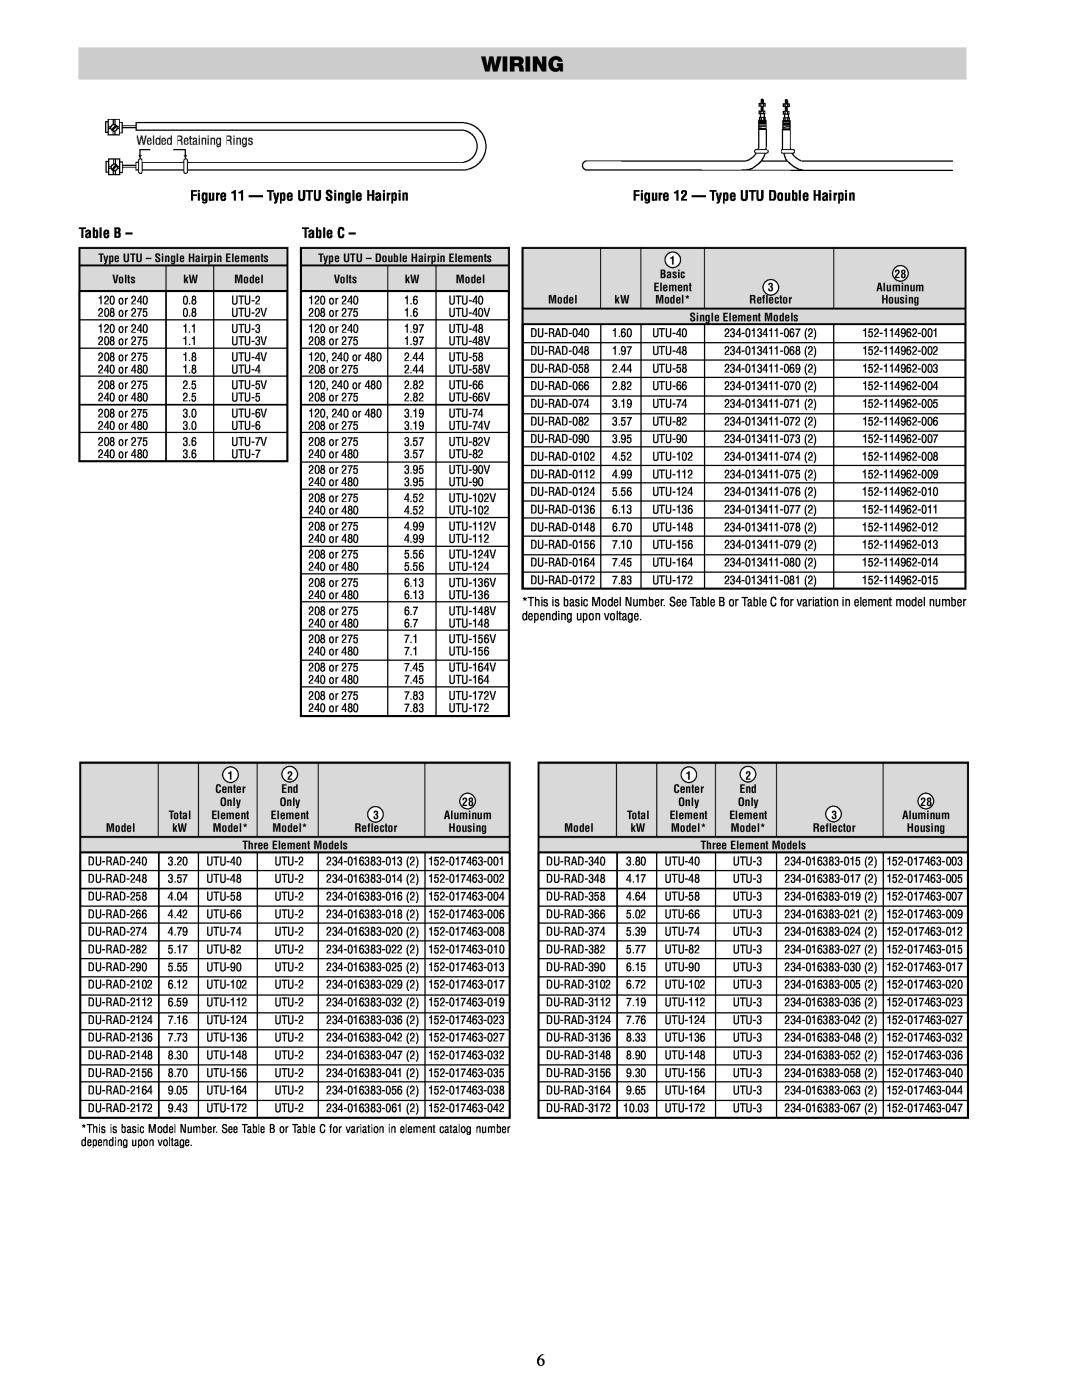 Chromalox DU-RAD-458 6.04 757 specifications Wiring, Type UTU Single Hairpin, Table B, Table C 